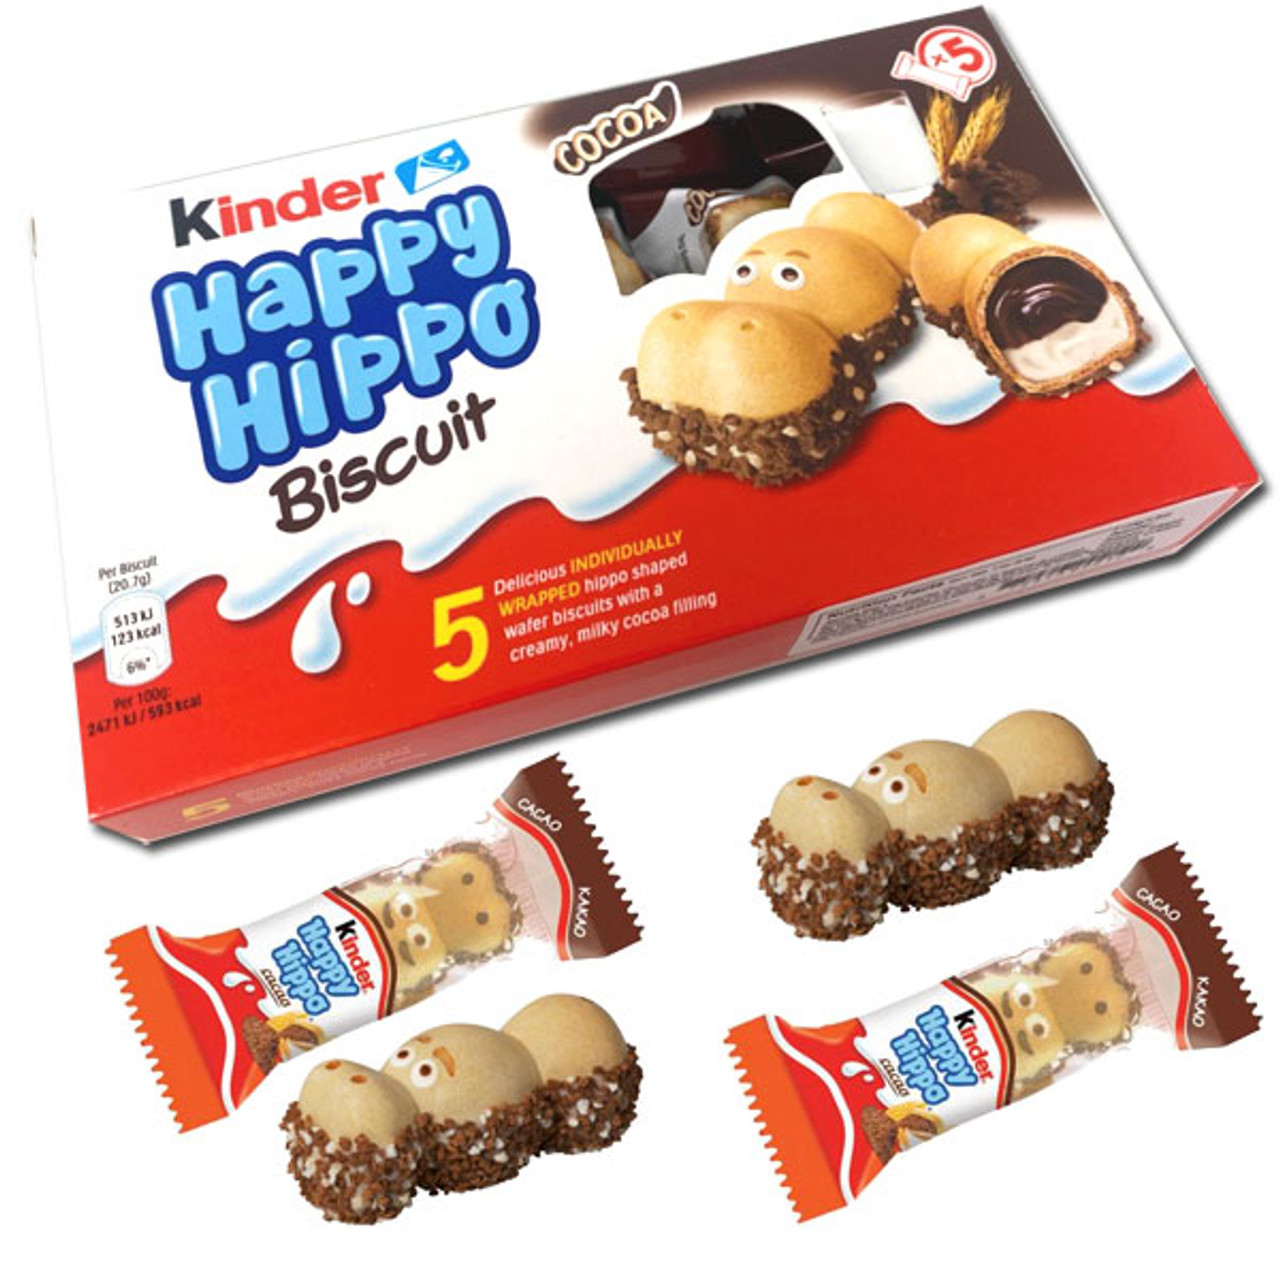 Kinder happy hippo